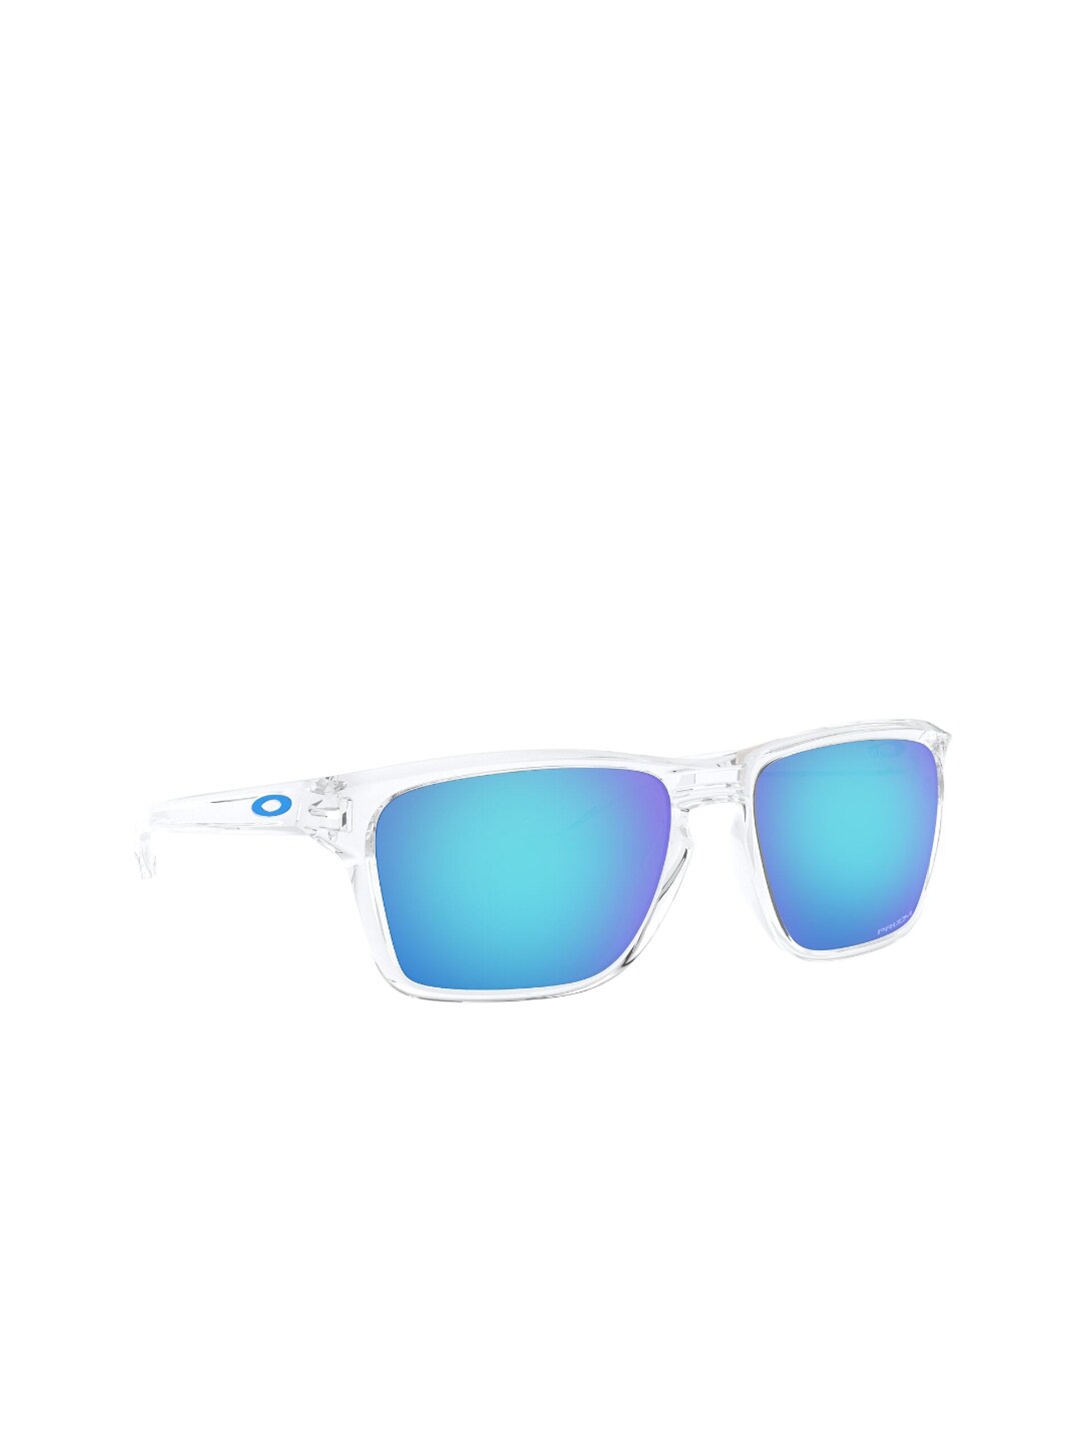 Buy OAKLEY Full Rim Square Sunglasses With UV Protected Lens ...